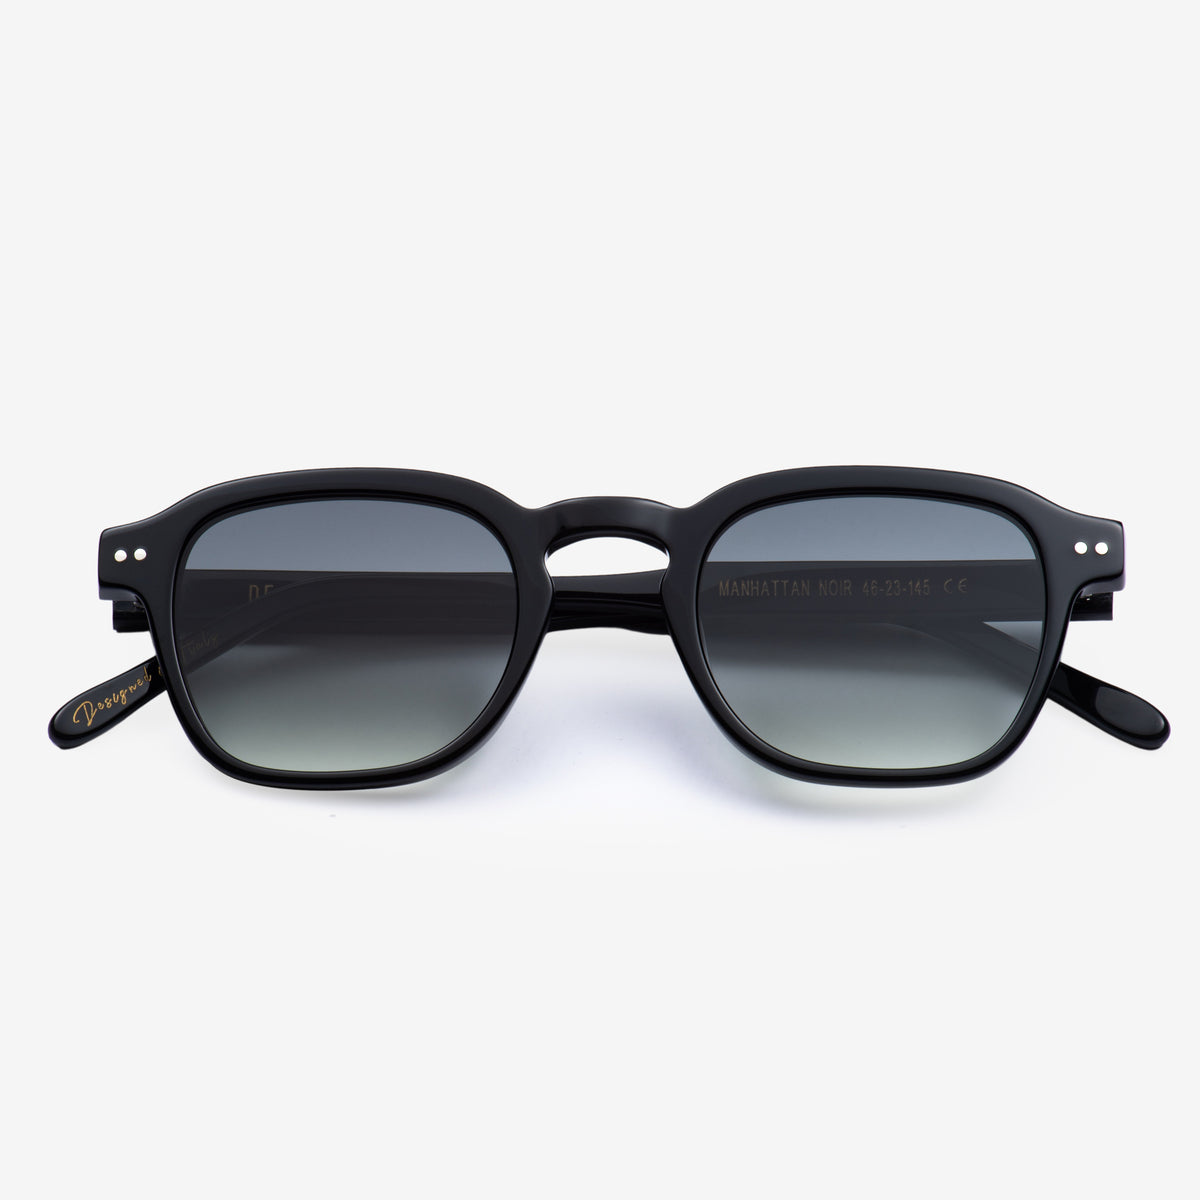 De-sunglasses| Manhattan noir